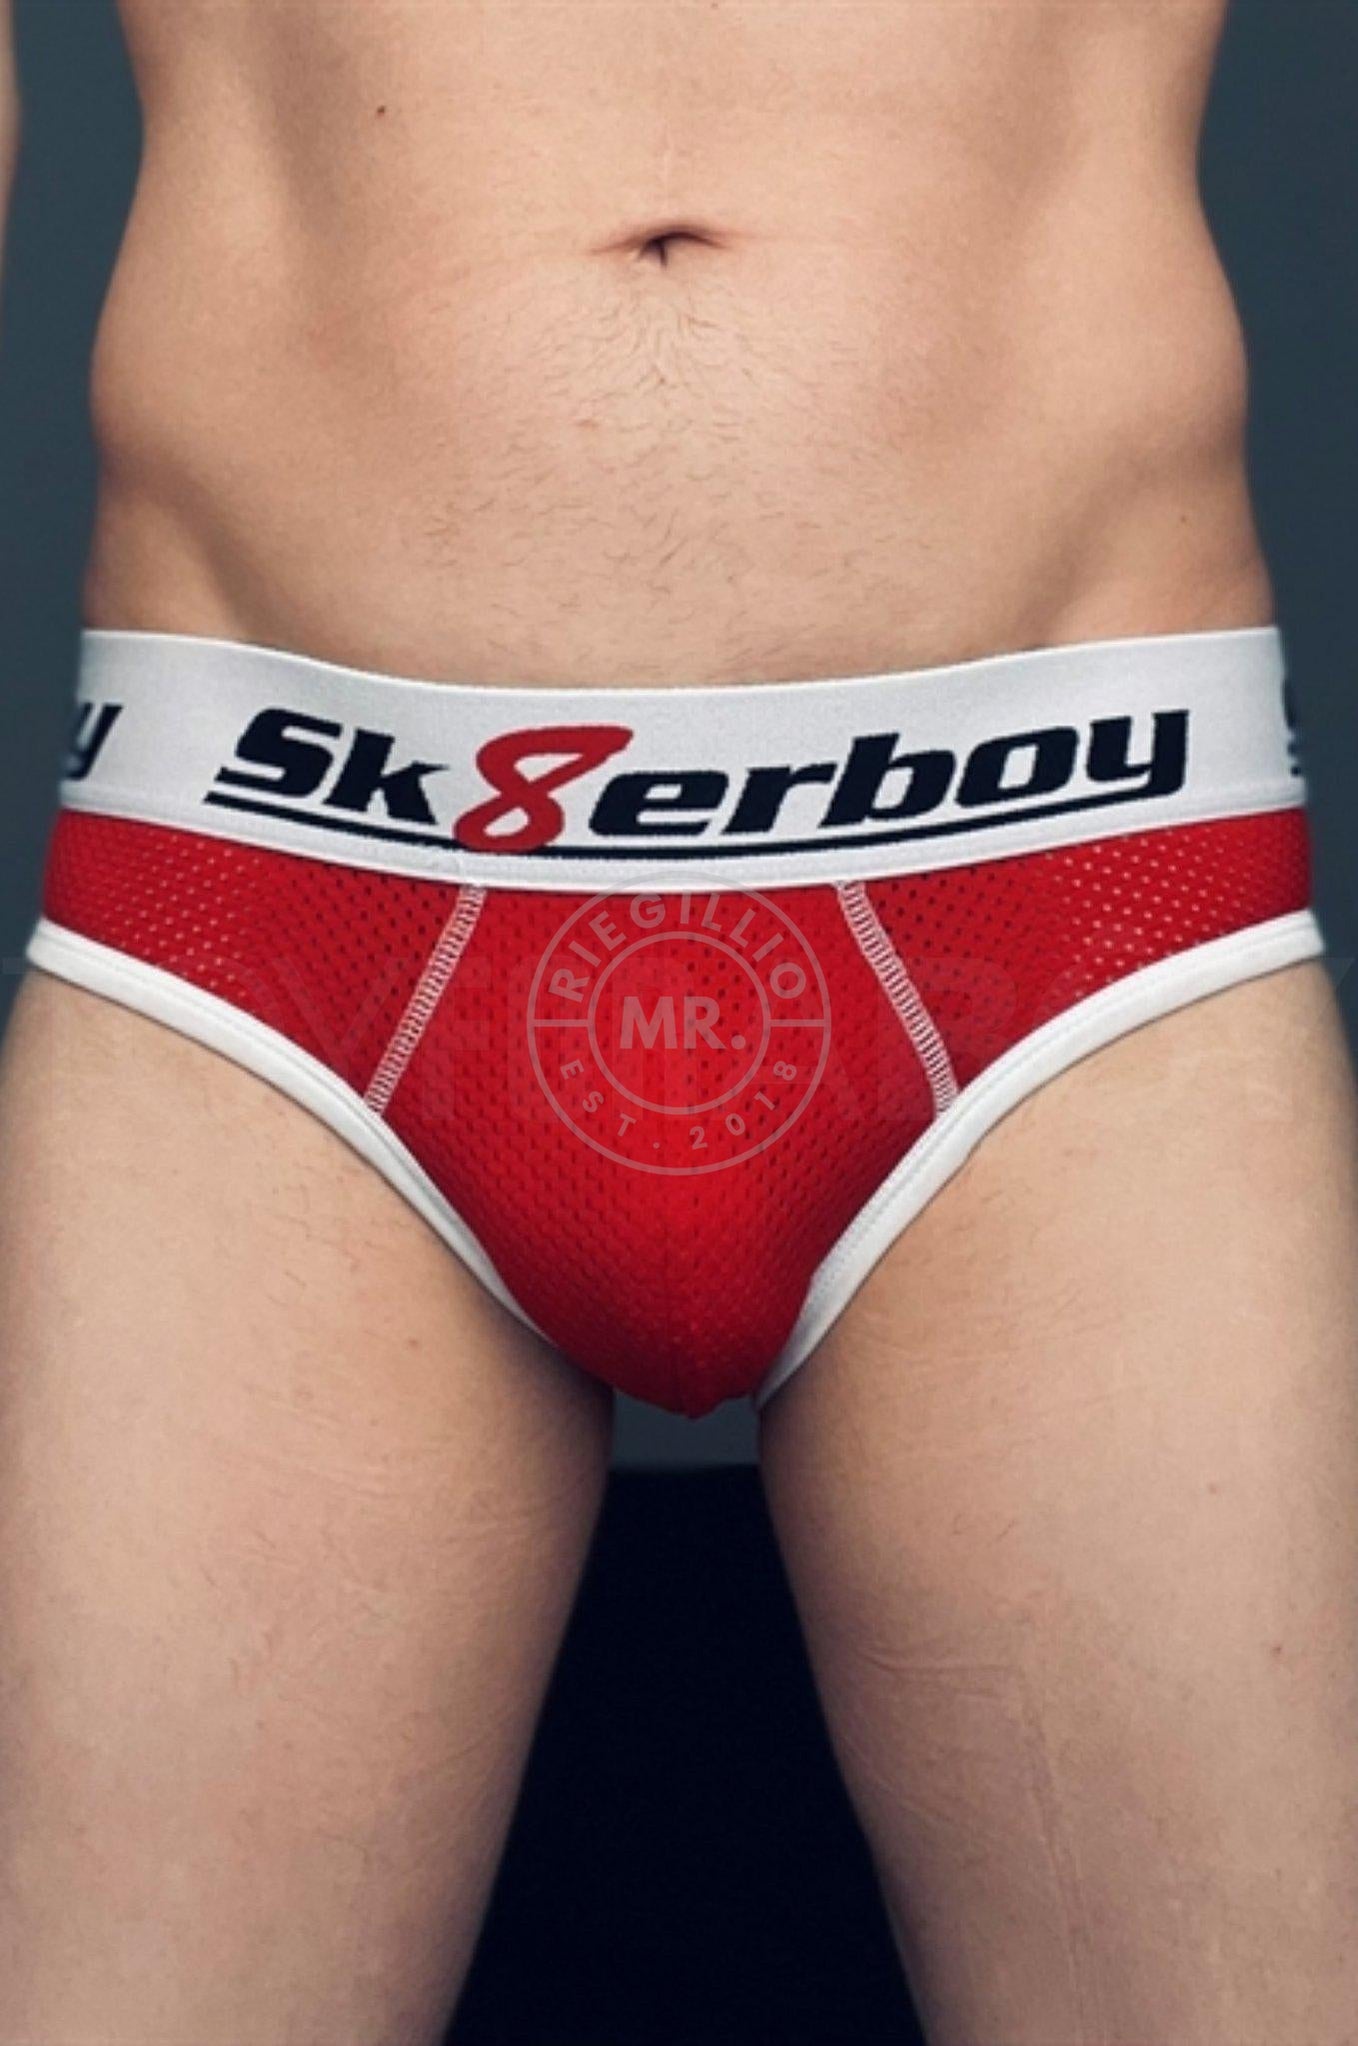 Sk8erboy Mesh Backless Brief - Red-at MR. Riegillio